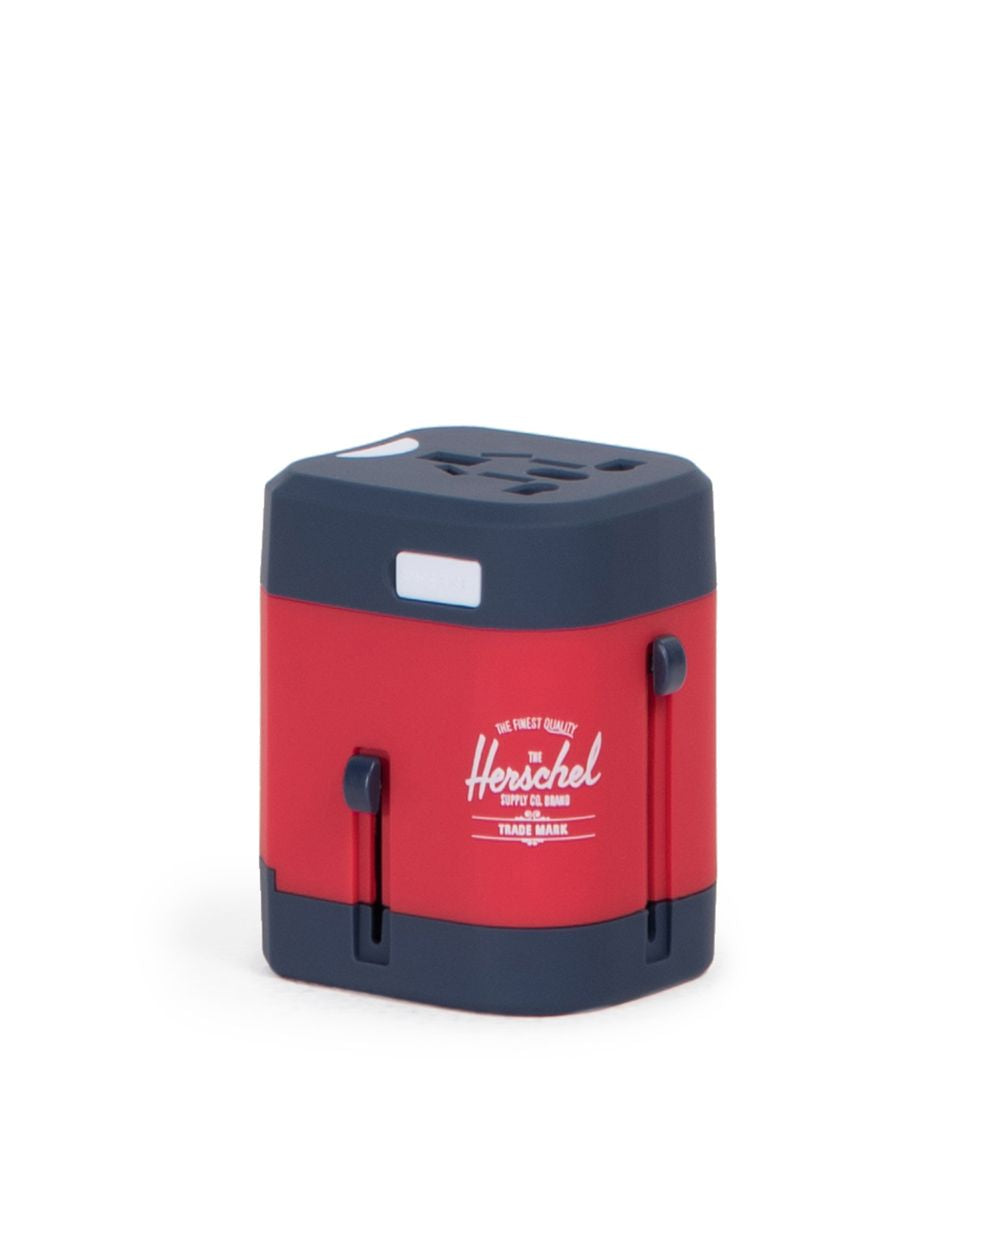 Herschel Supply Co. Travel Adapter - Navy/Red